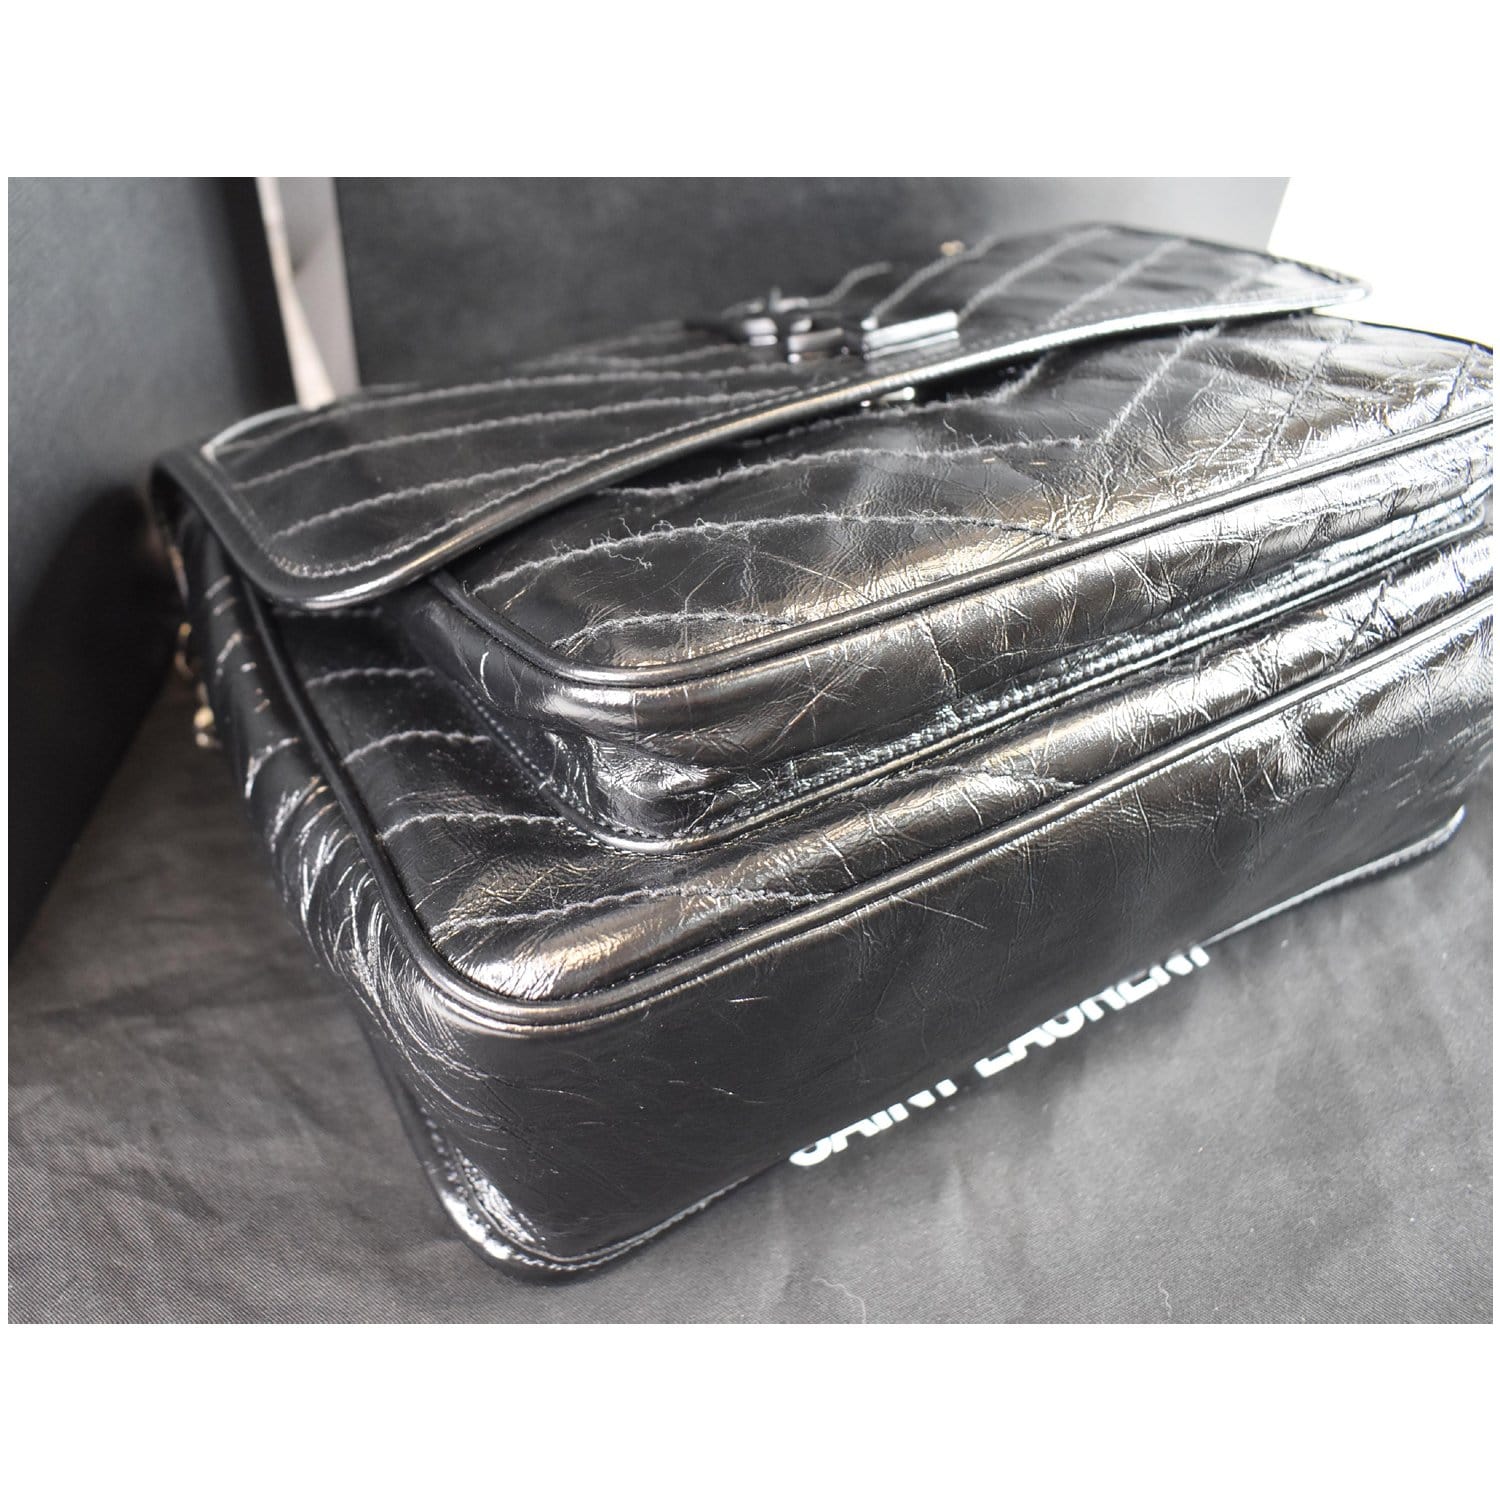 Saint Laurent Niki Ysl Monogram Crinkle Leather Wallet